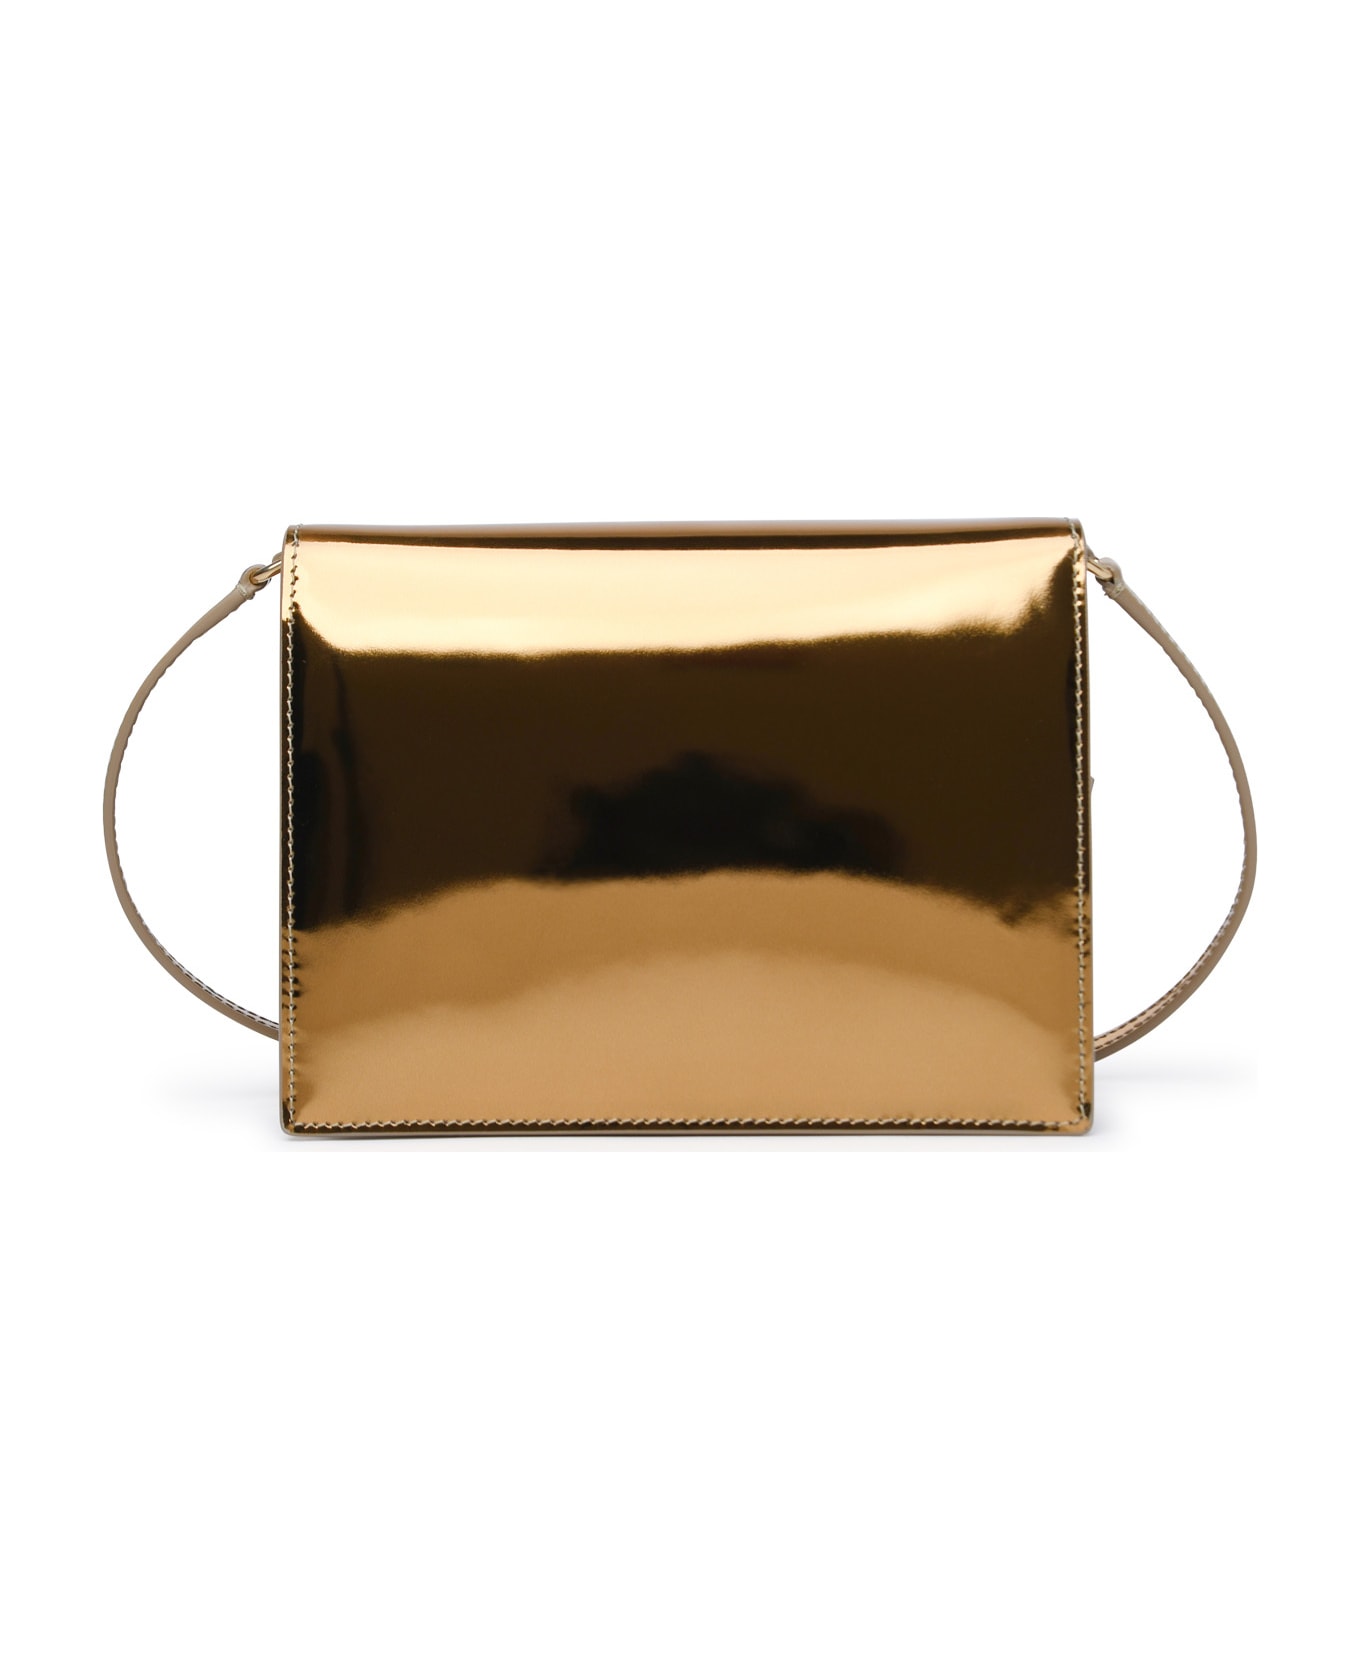 Dolce & Gabbana 'dg' Gold Calf Leather Bag - Gold